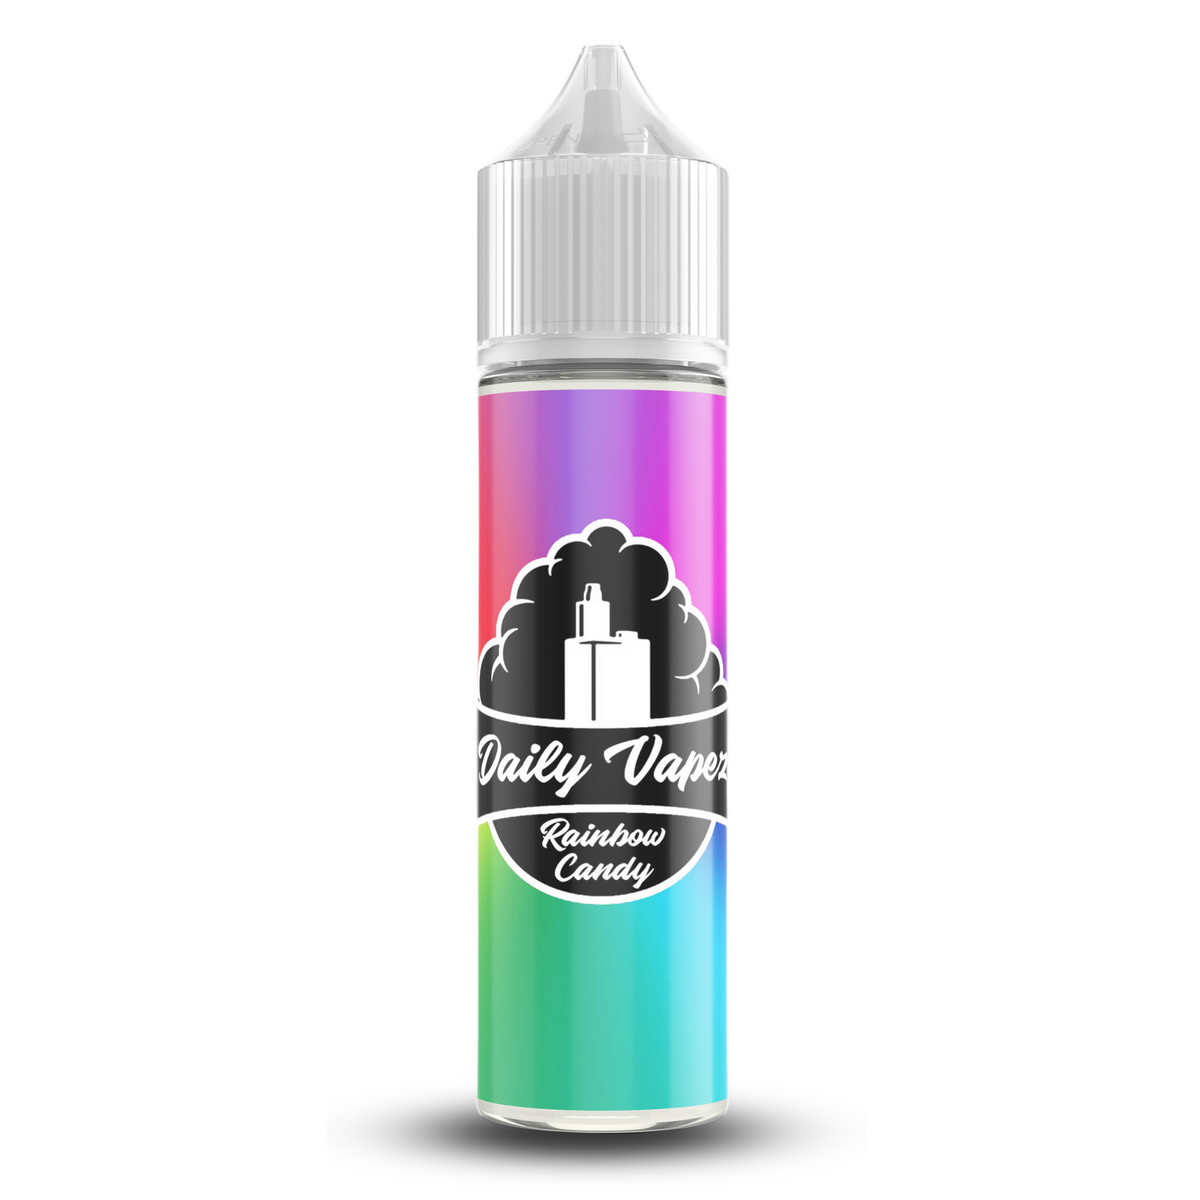 Daily Vapez - Rainbow Candy 50ml